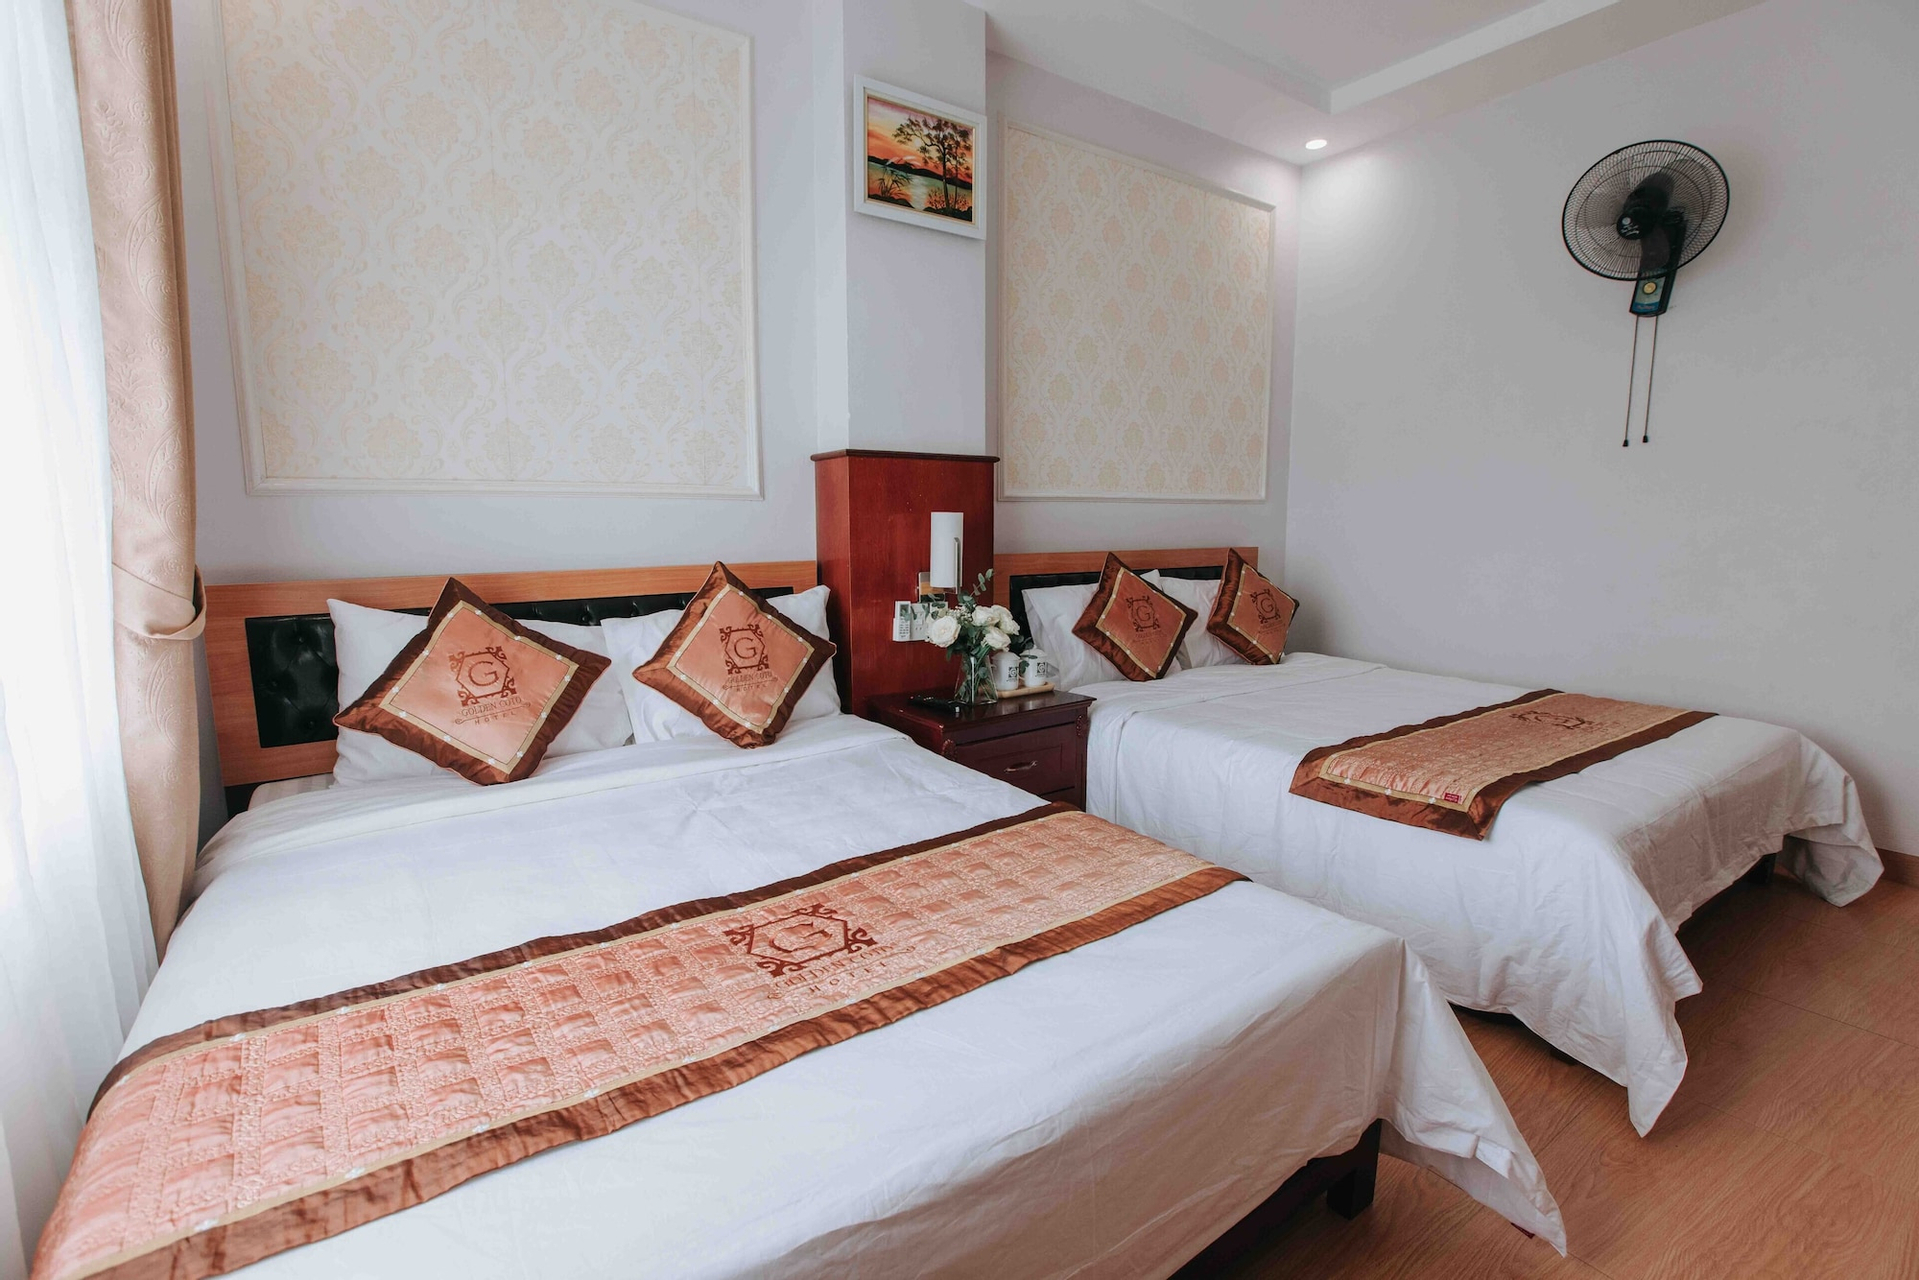 Bedroom 3, Golden Coto Hotel, Cô Tô